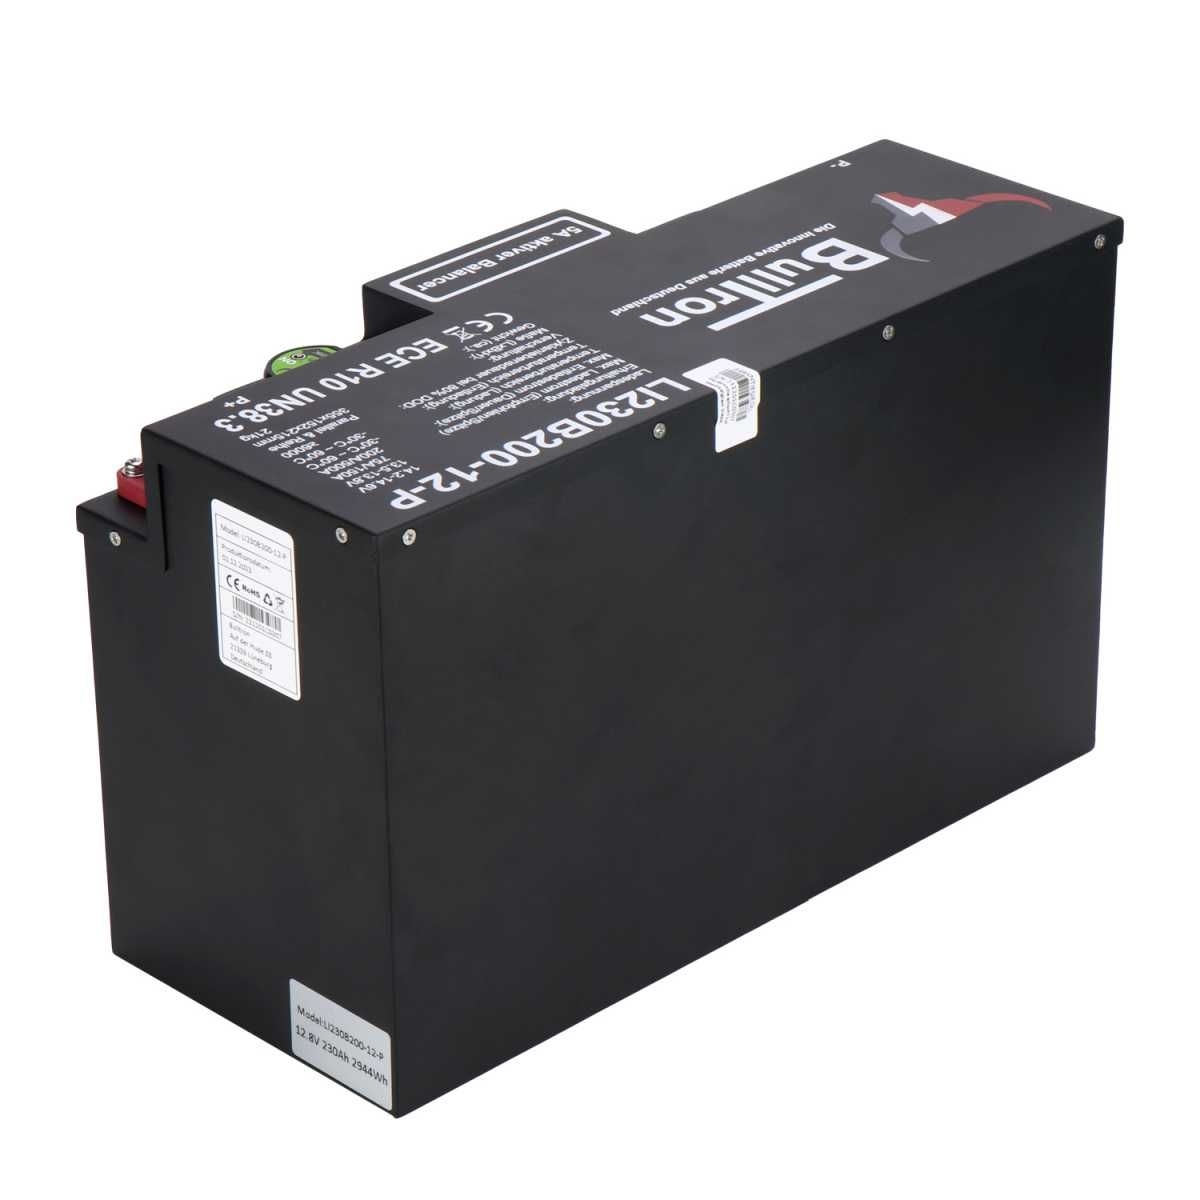 BULLTRON Lithium-Batterie POLAR 230Ah 12V inkl. BMS 200A Dauerstrom - App - LI230B200-12-P